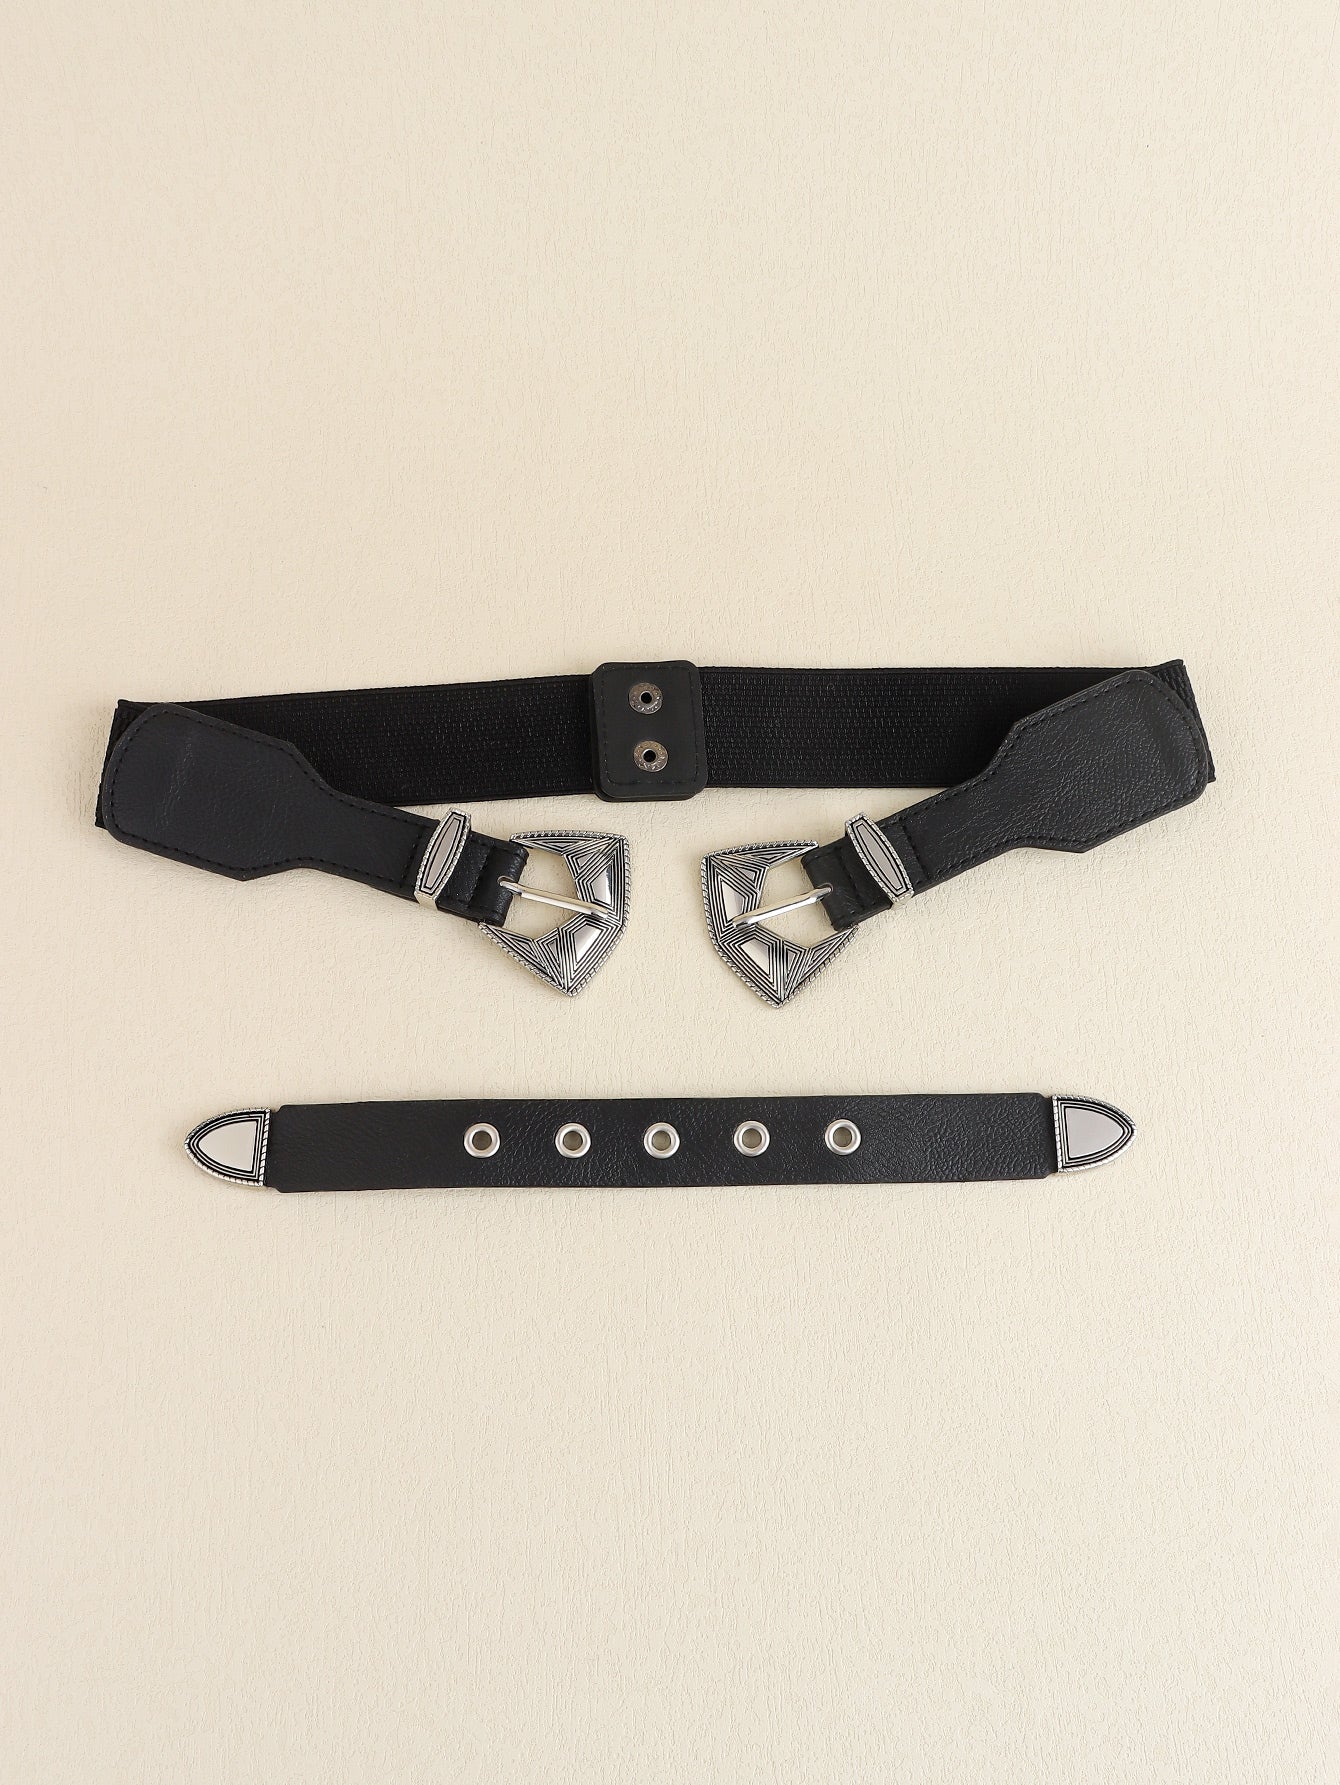 Jessica Anne Beauty Double Buckle PU Leather Belt